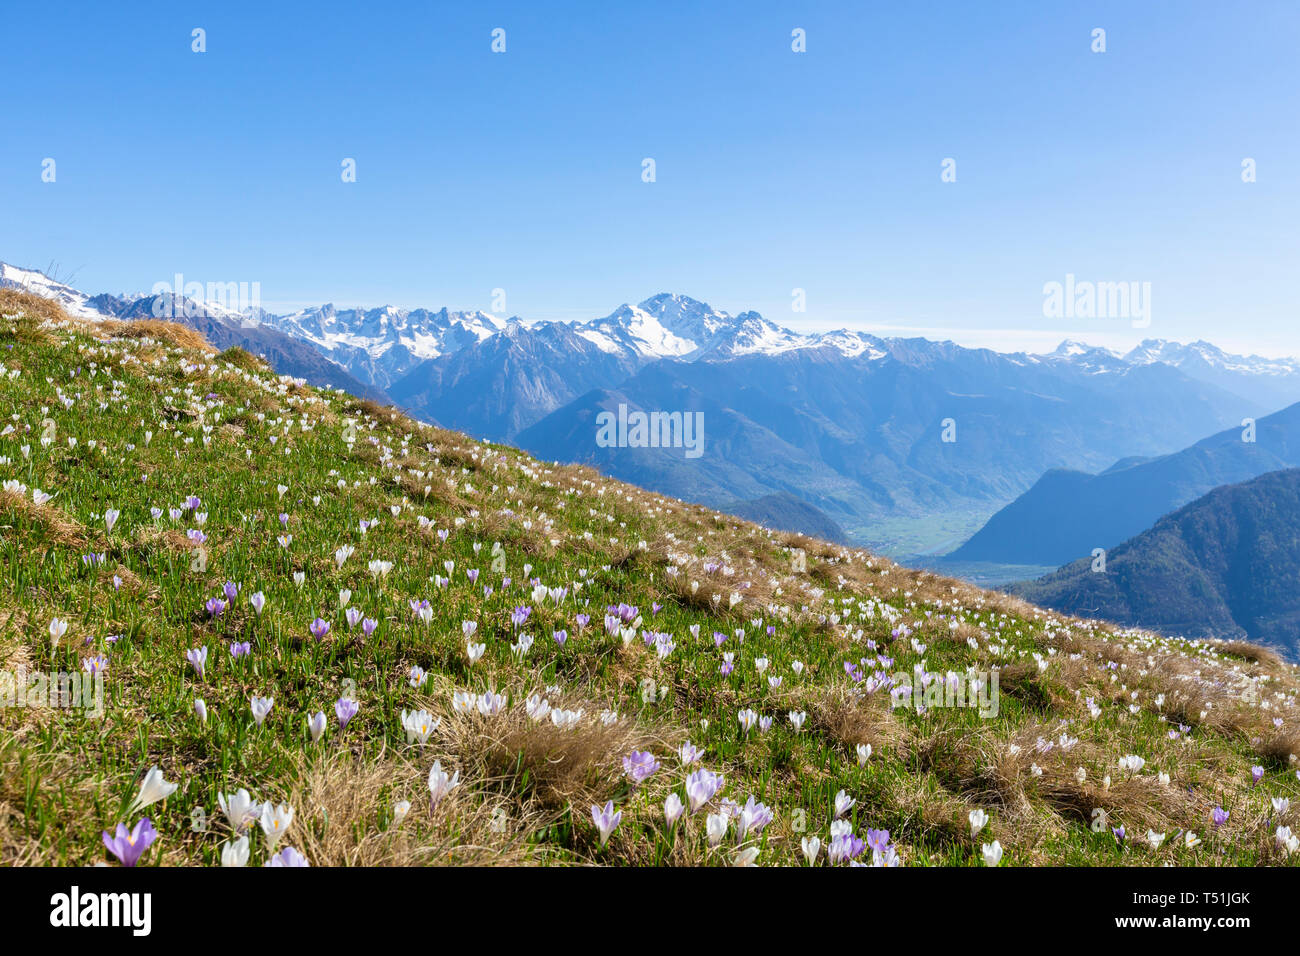 Crocus flowers in bloom surrounding Cima Rosetta, Val Gerola, Orobie Alps, Valtellina, Sondrio province, Lombardy, Italy Stock Photo